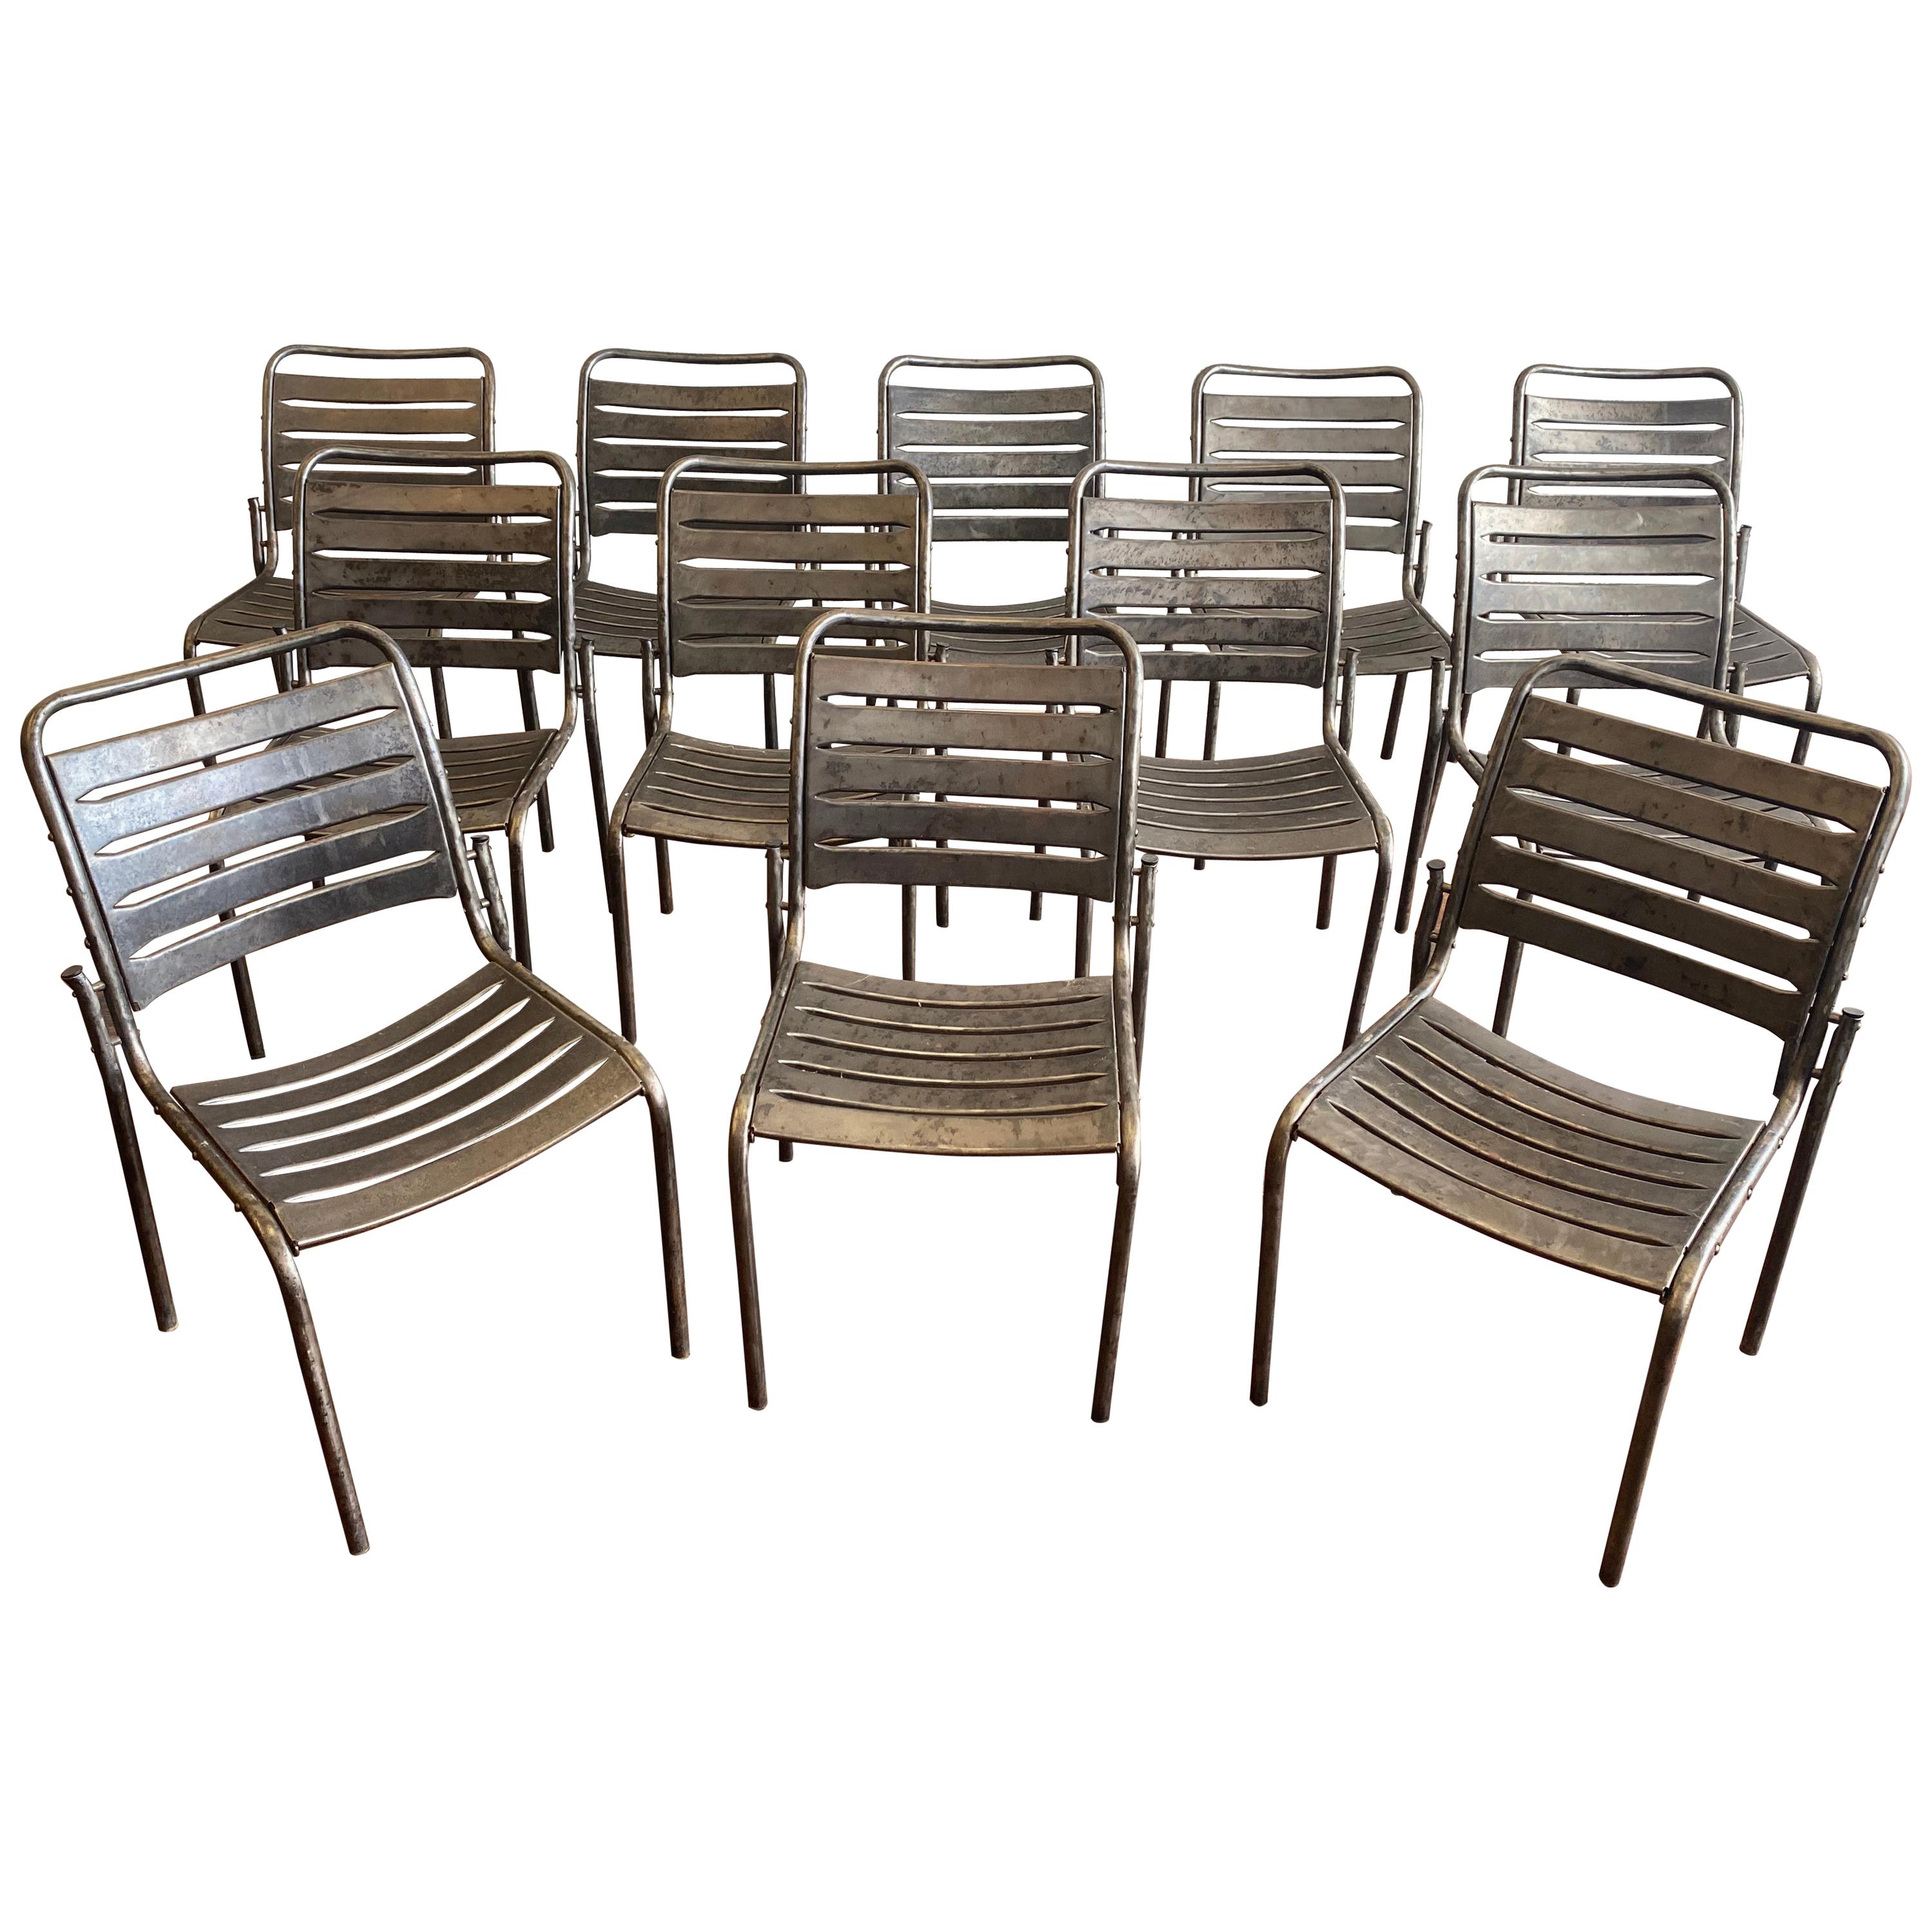 Set of 12 Modern Metal Chairs